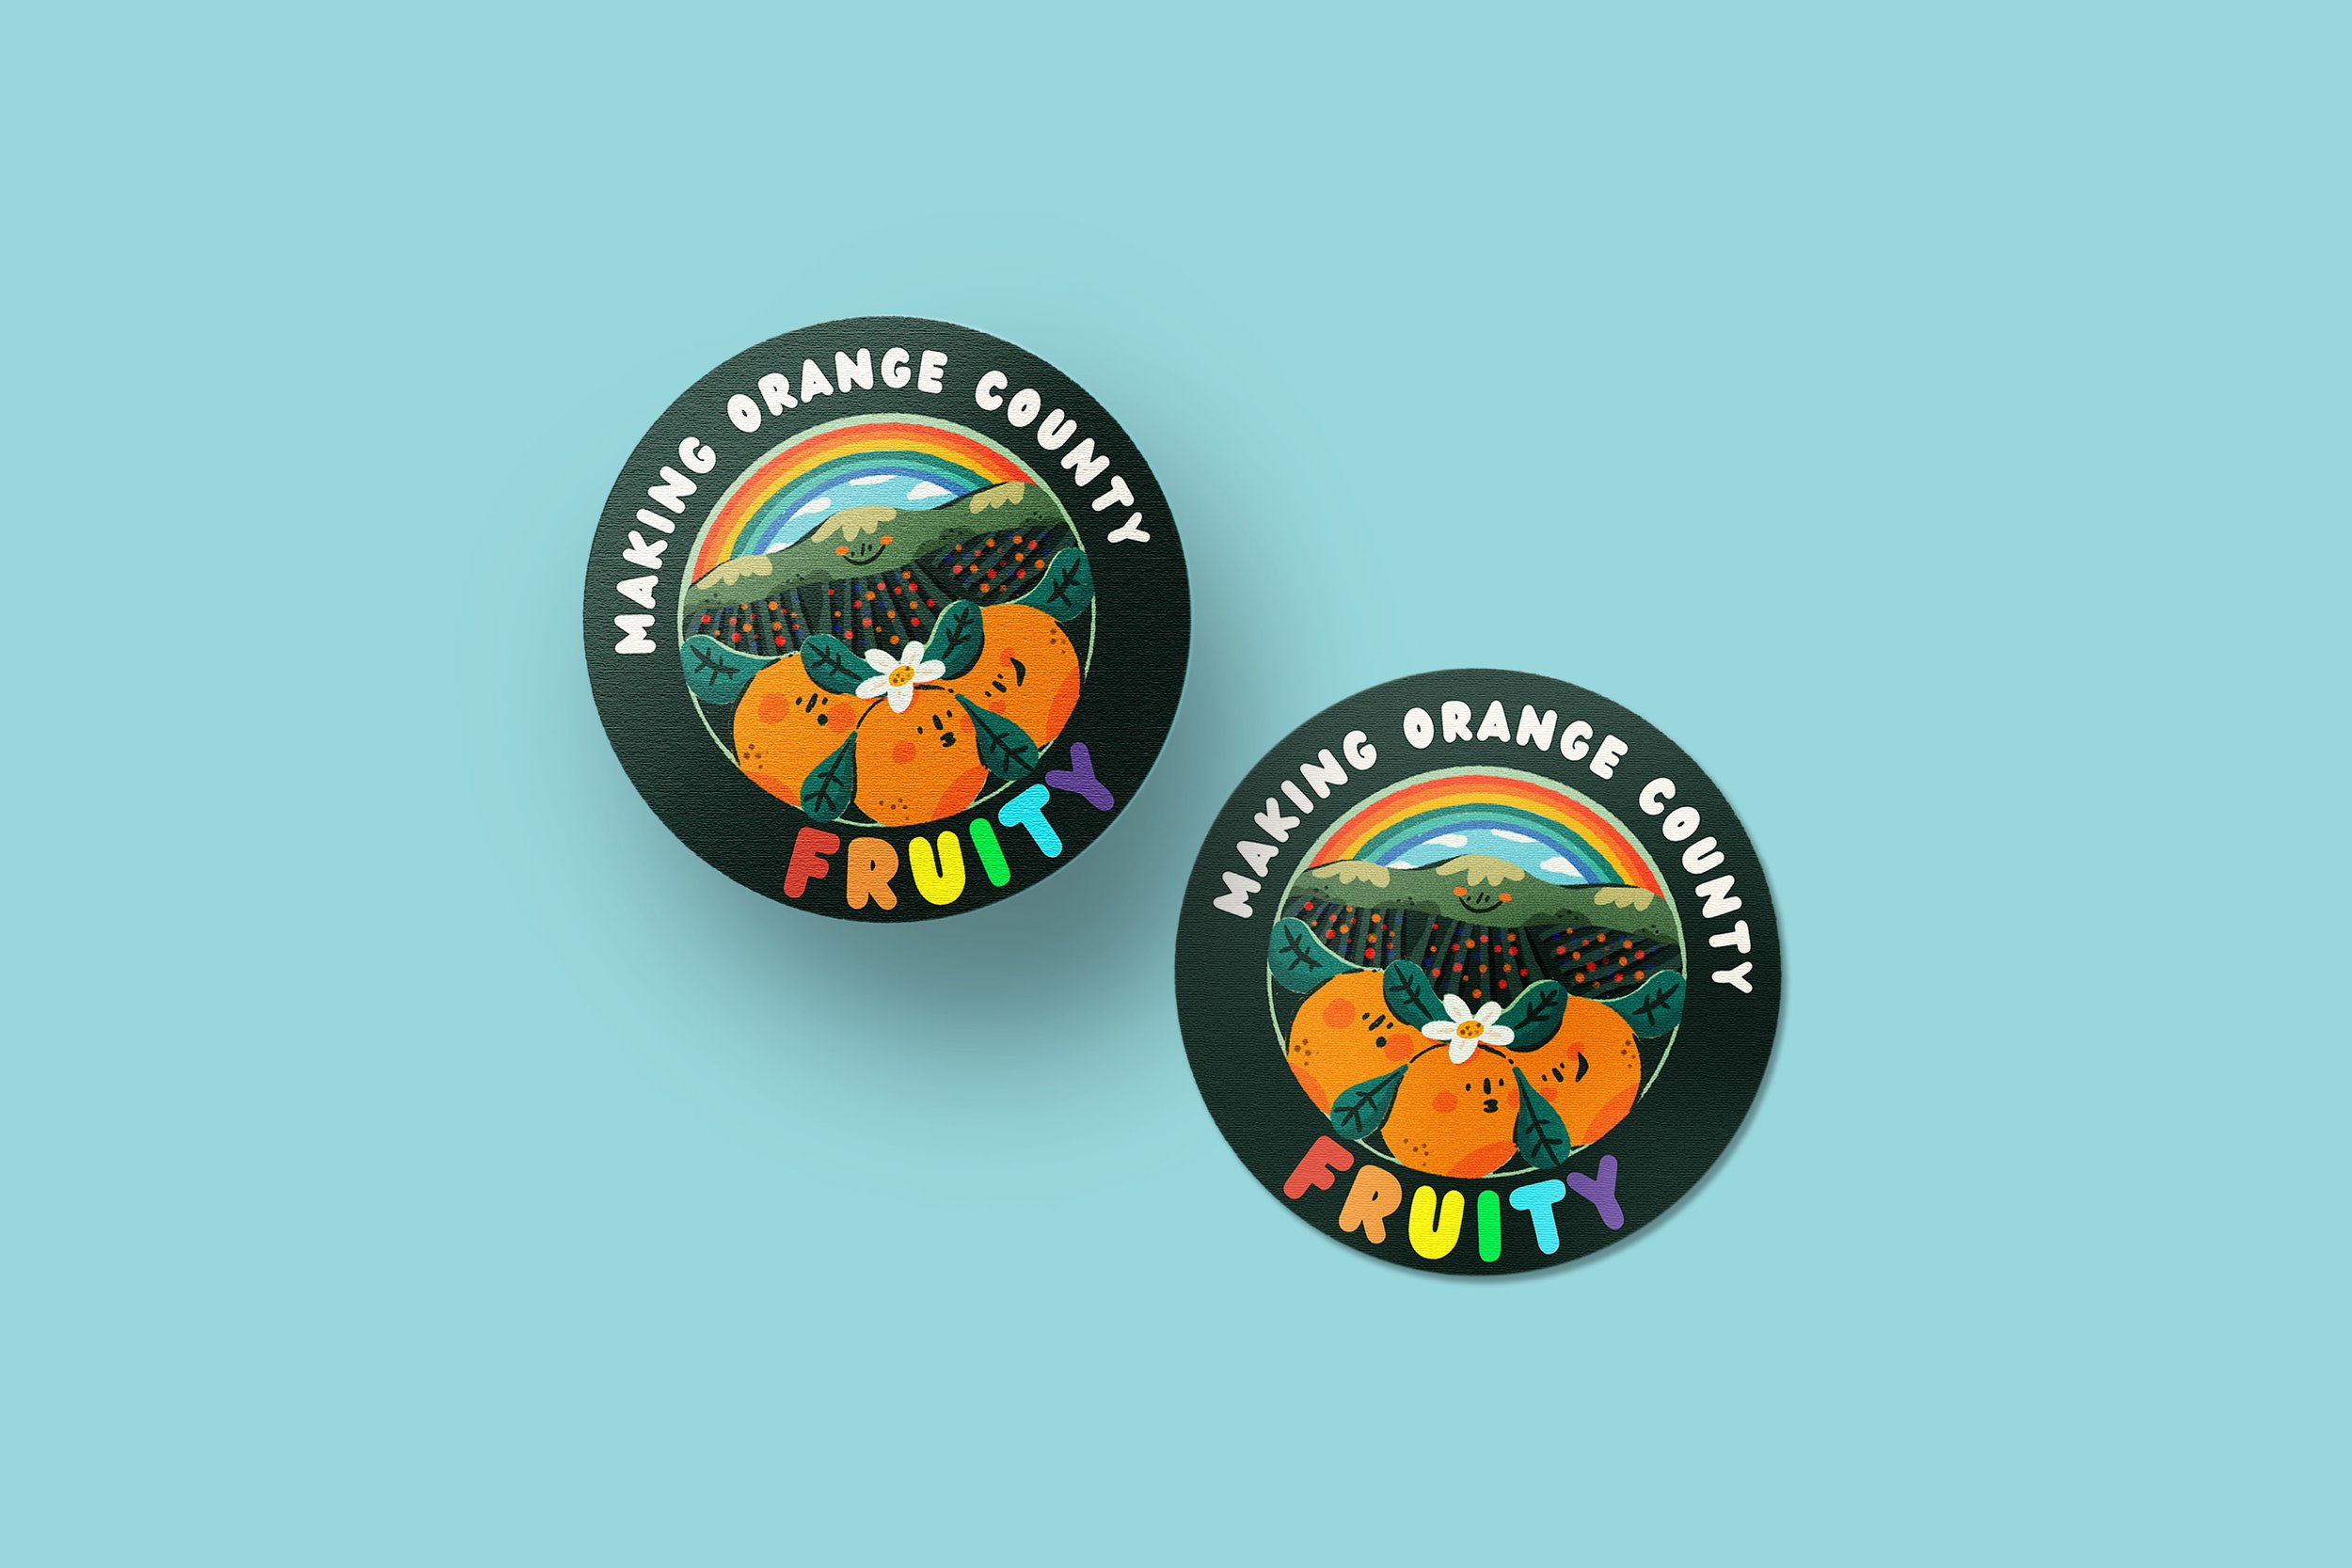 "Making Orange County Fruity" Stickers